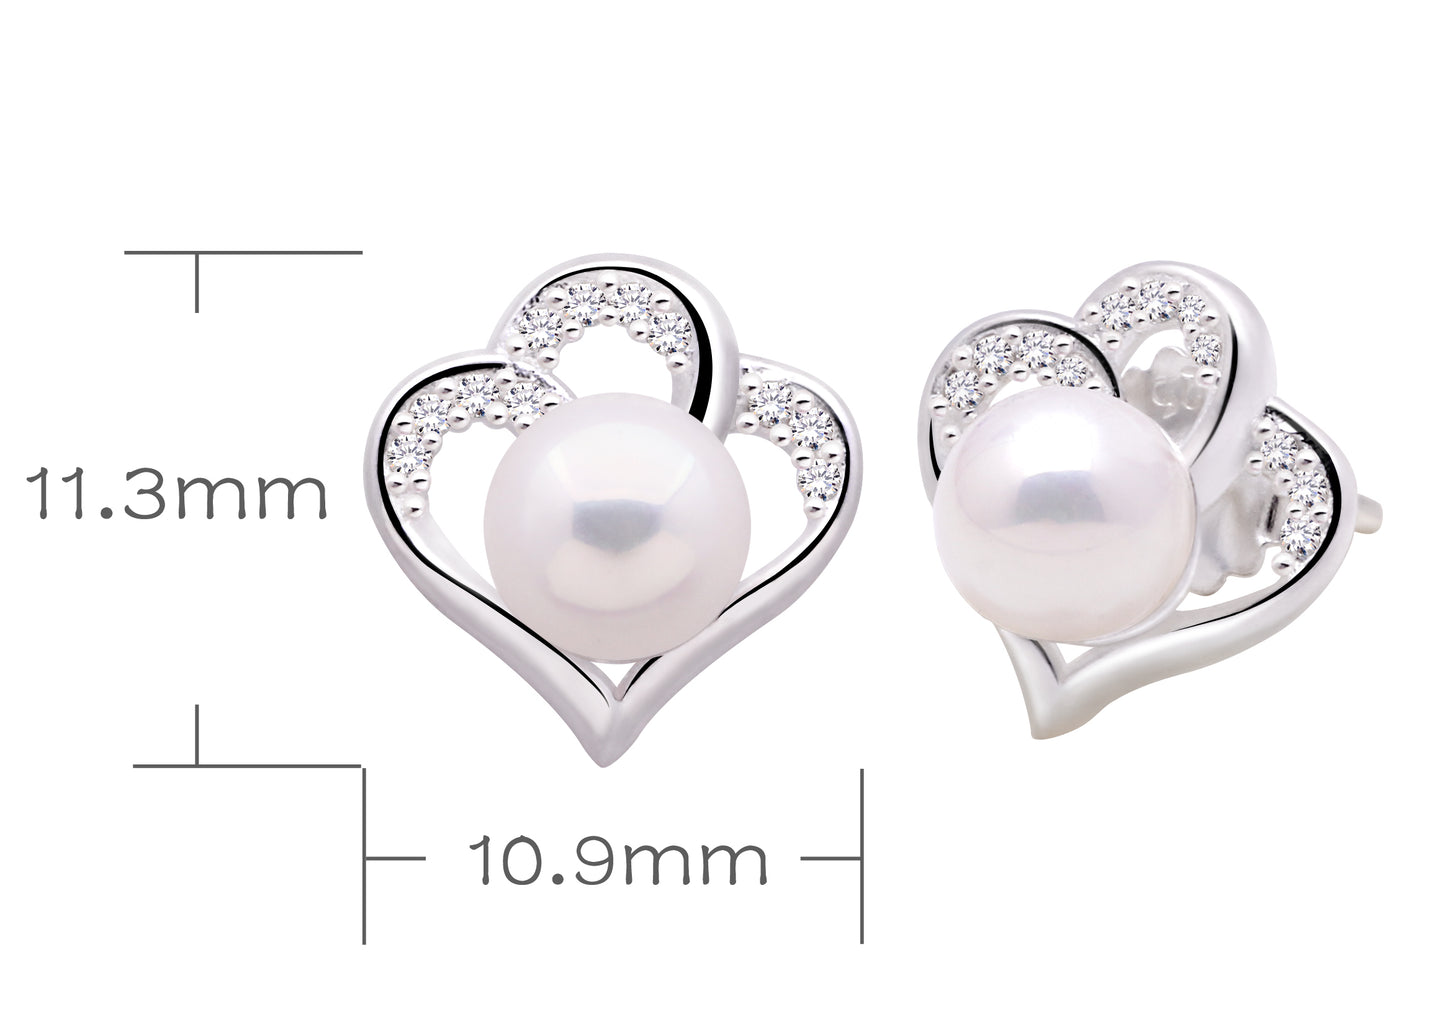 ALOV Jewelry Sterling Silver Simulated Pearl Stud Earrings